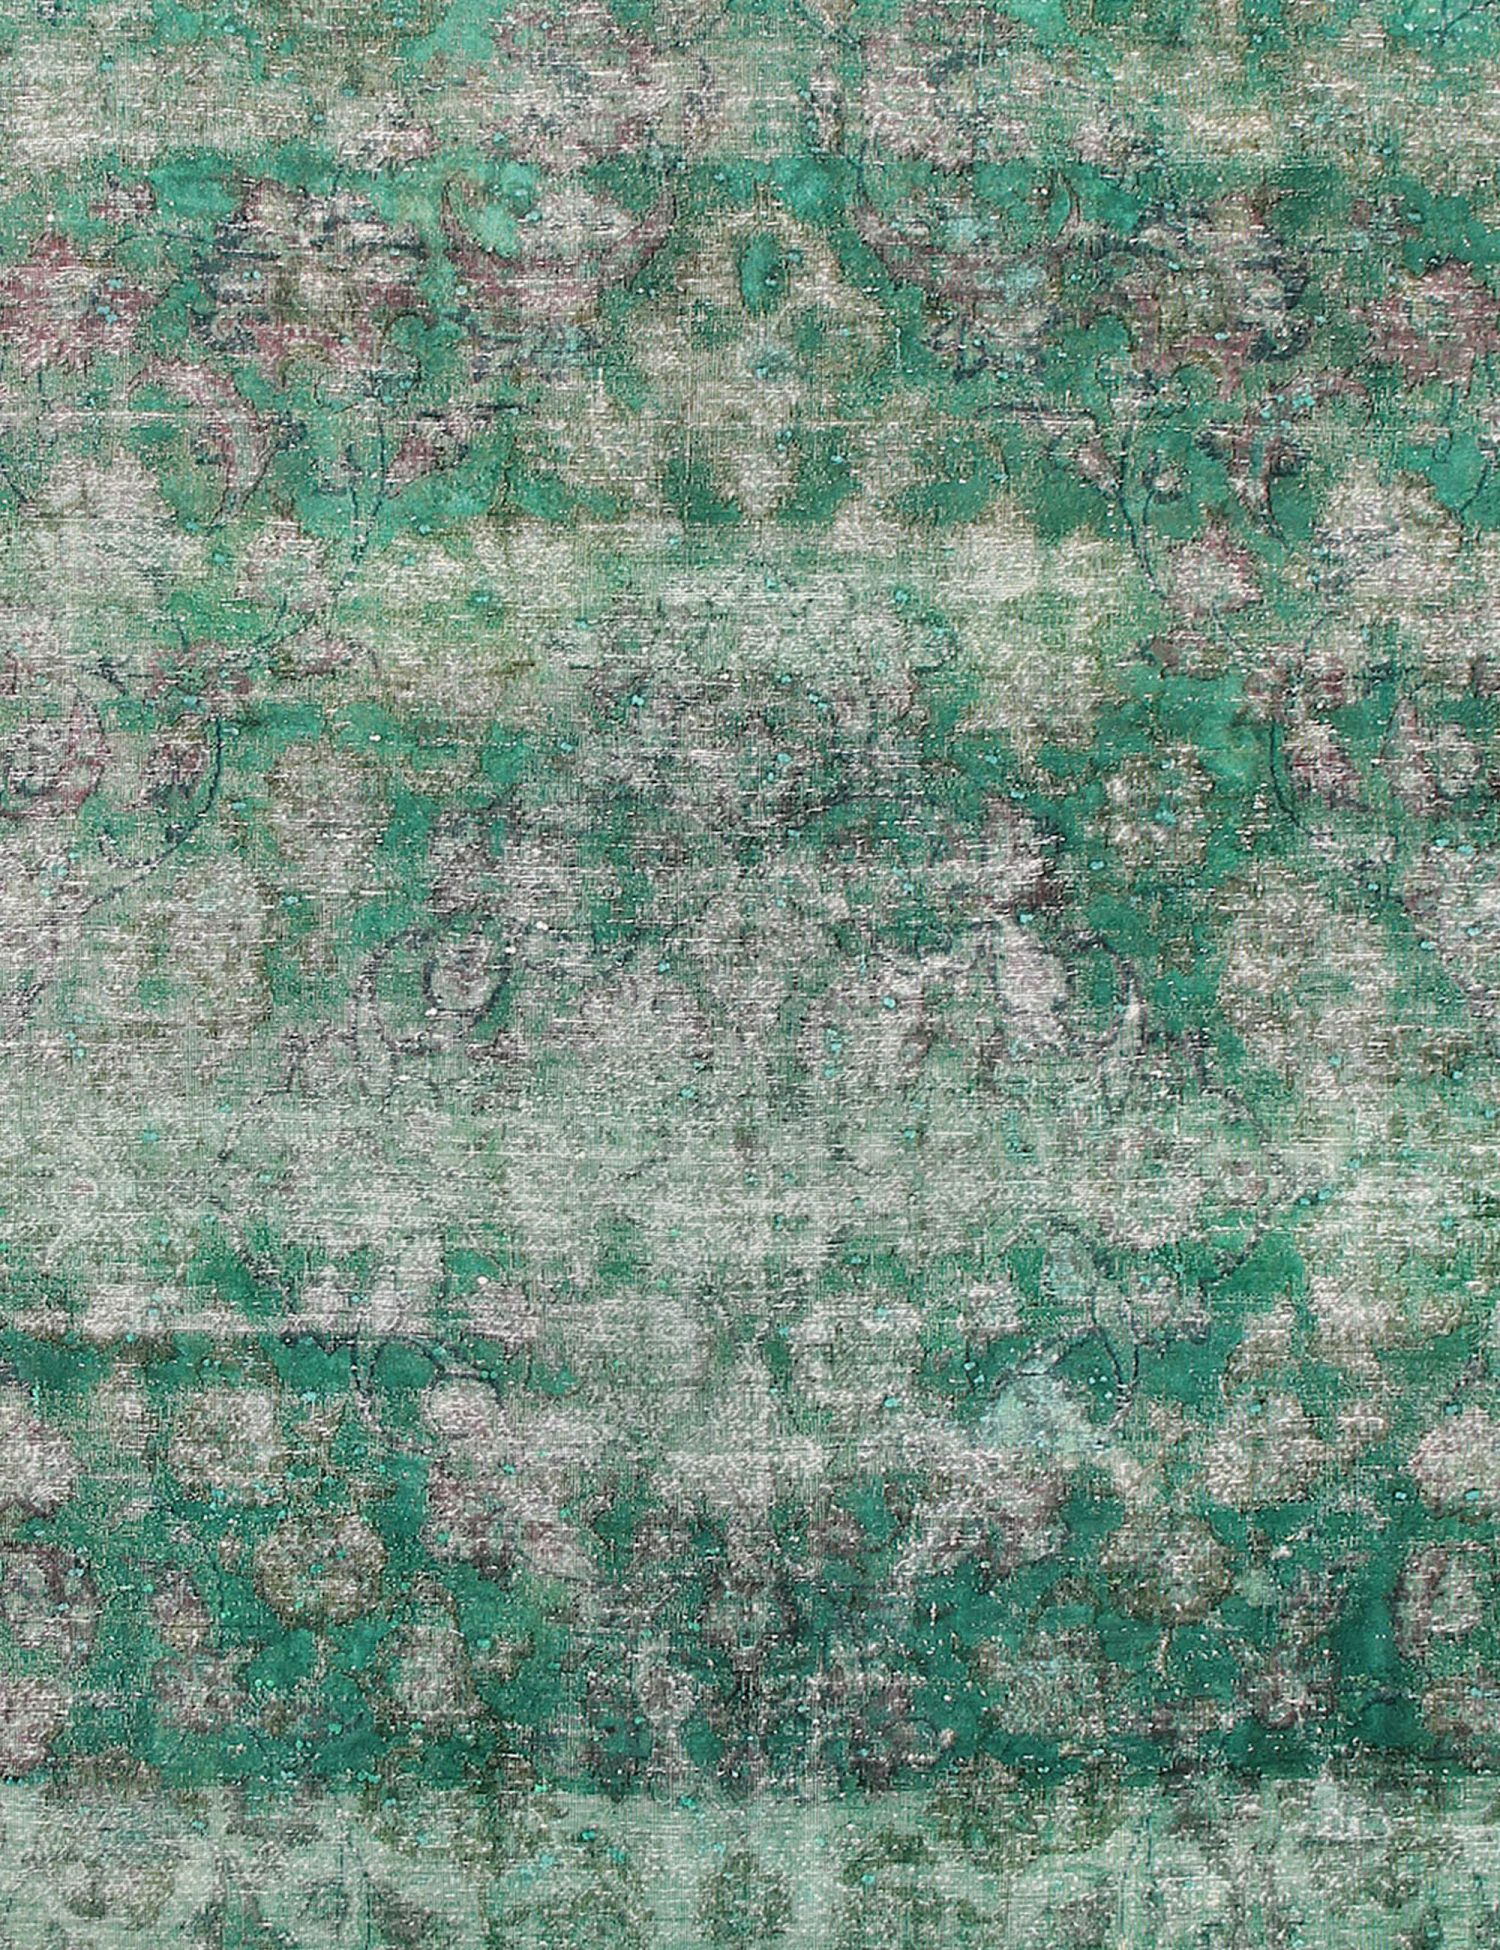 Quadrat  Vintage Teppich  grün <br/>205 x 205 cm